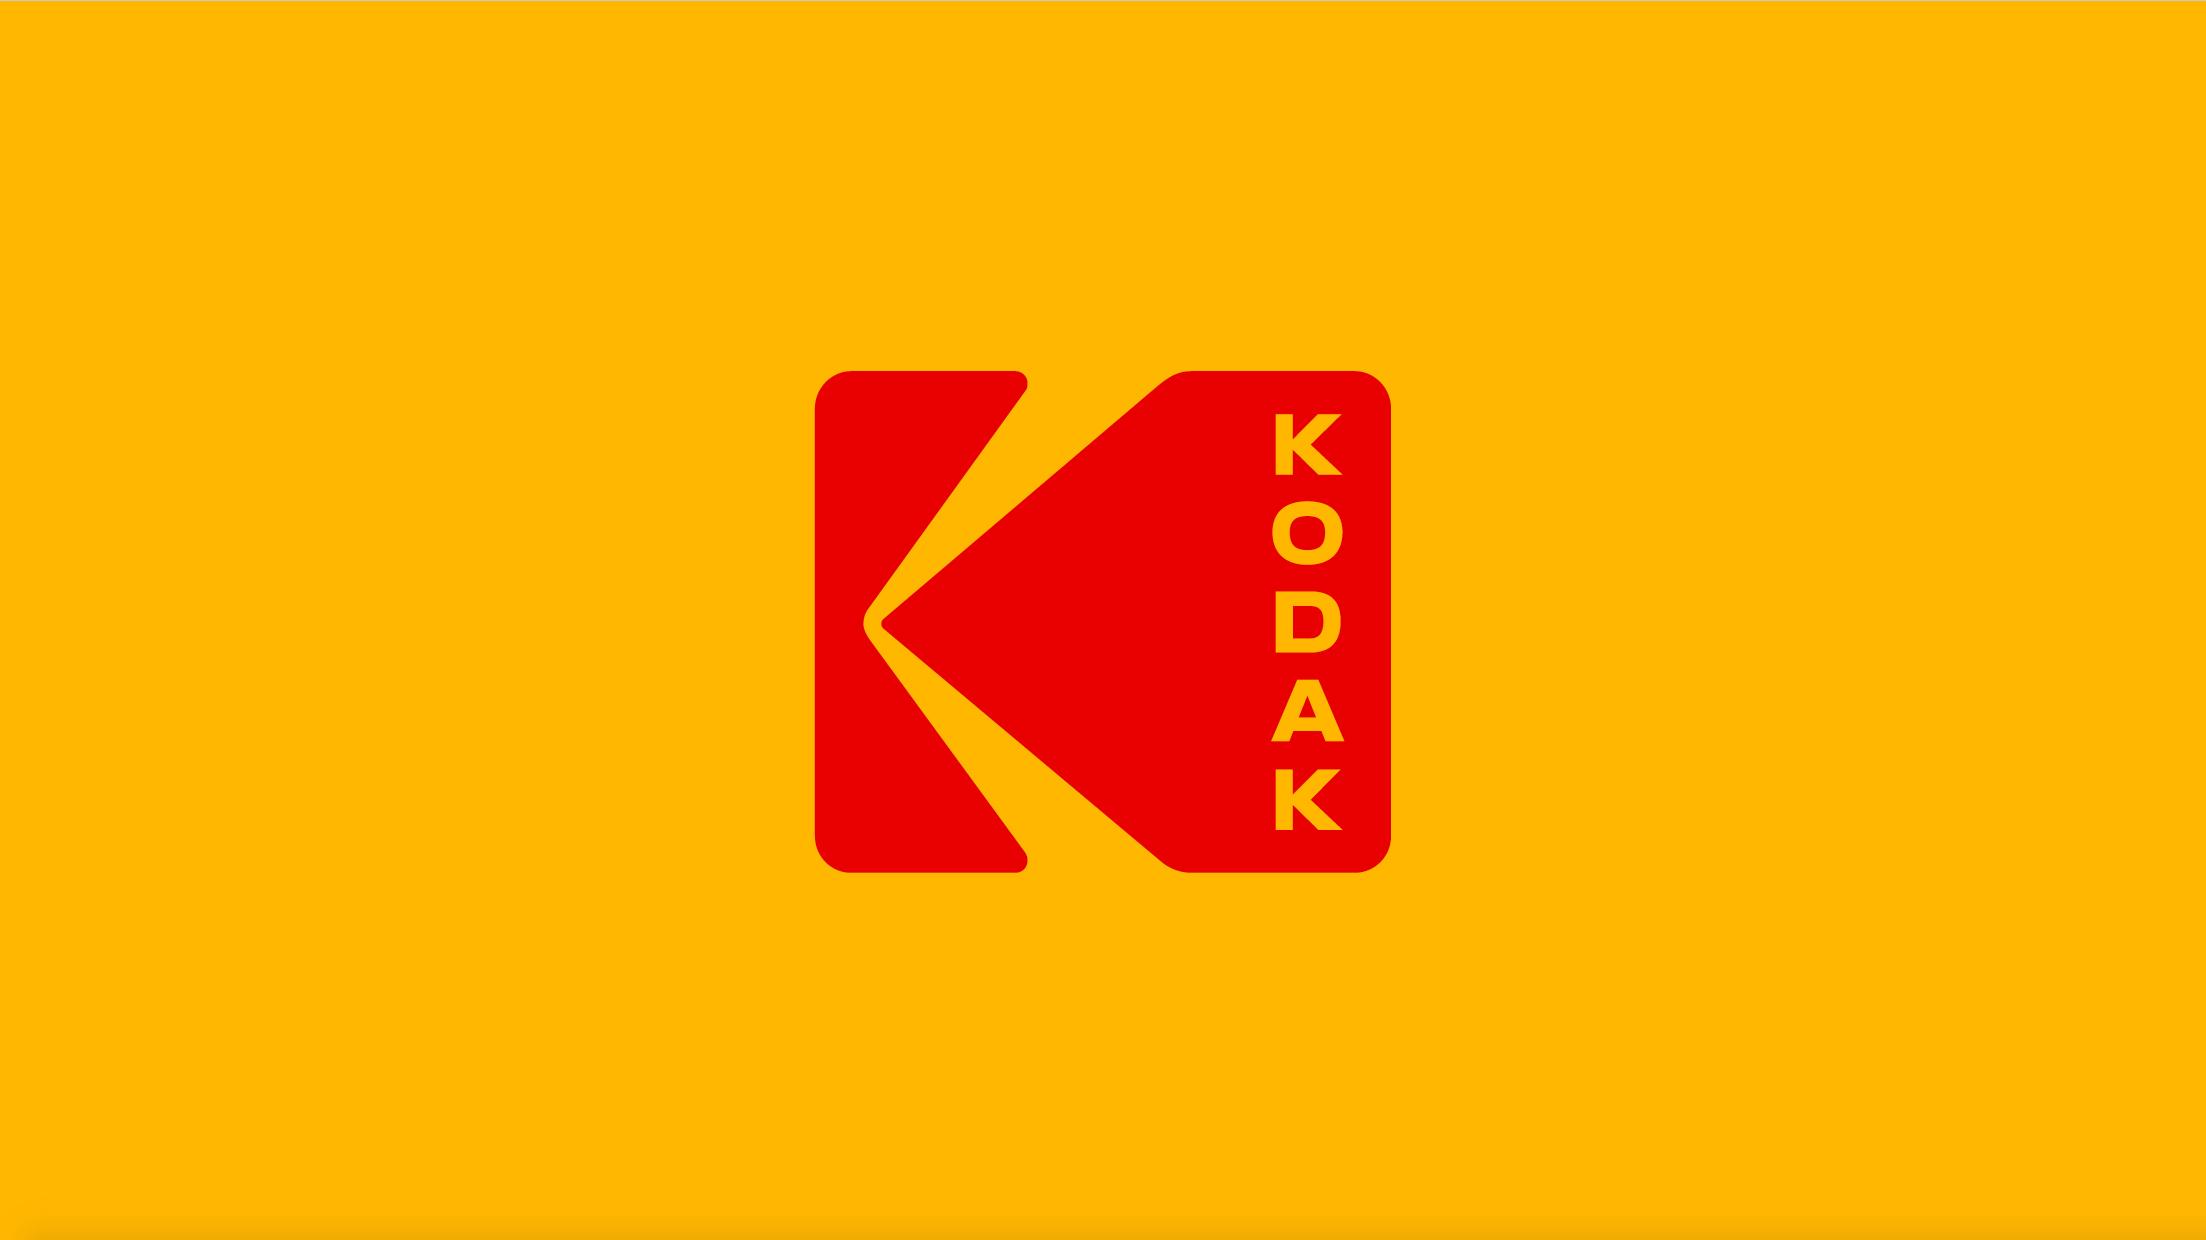 Big K Logo - Kodak brings back the big 'K' logo | Inquirer Technology